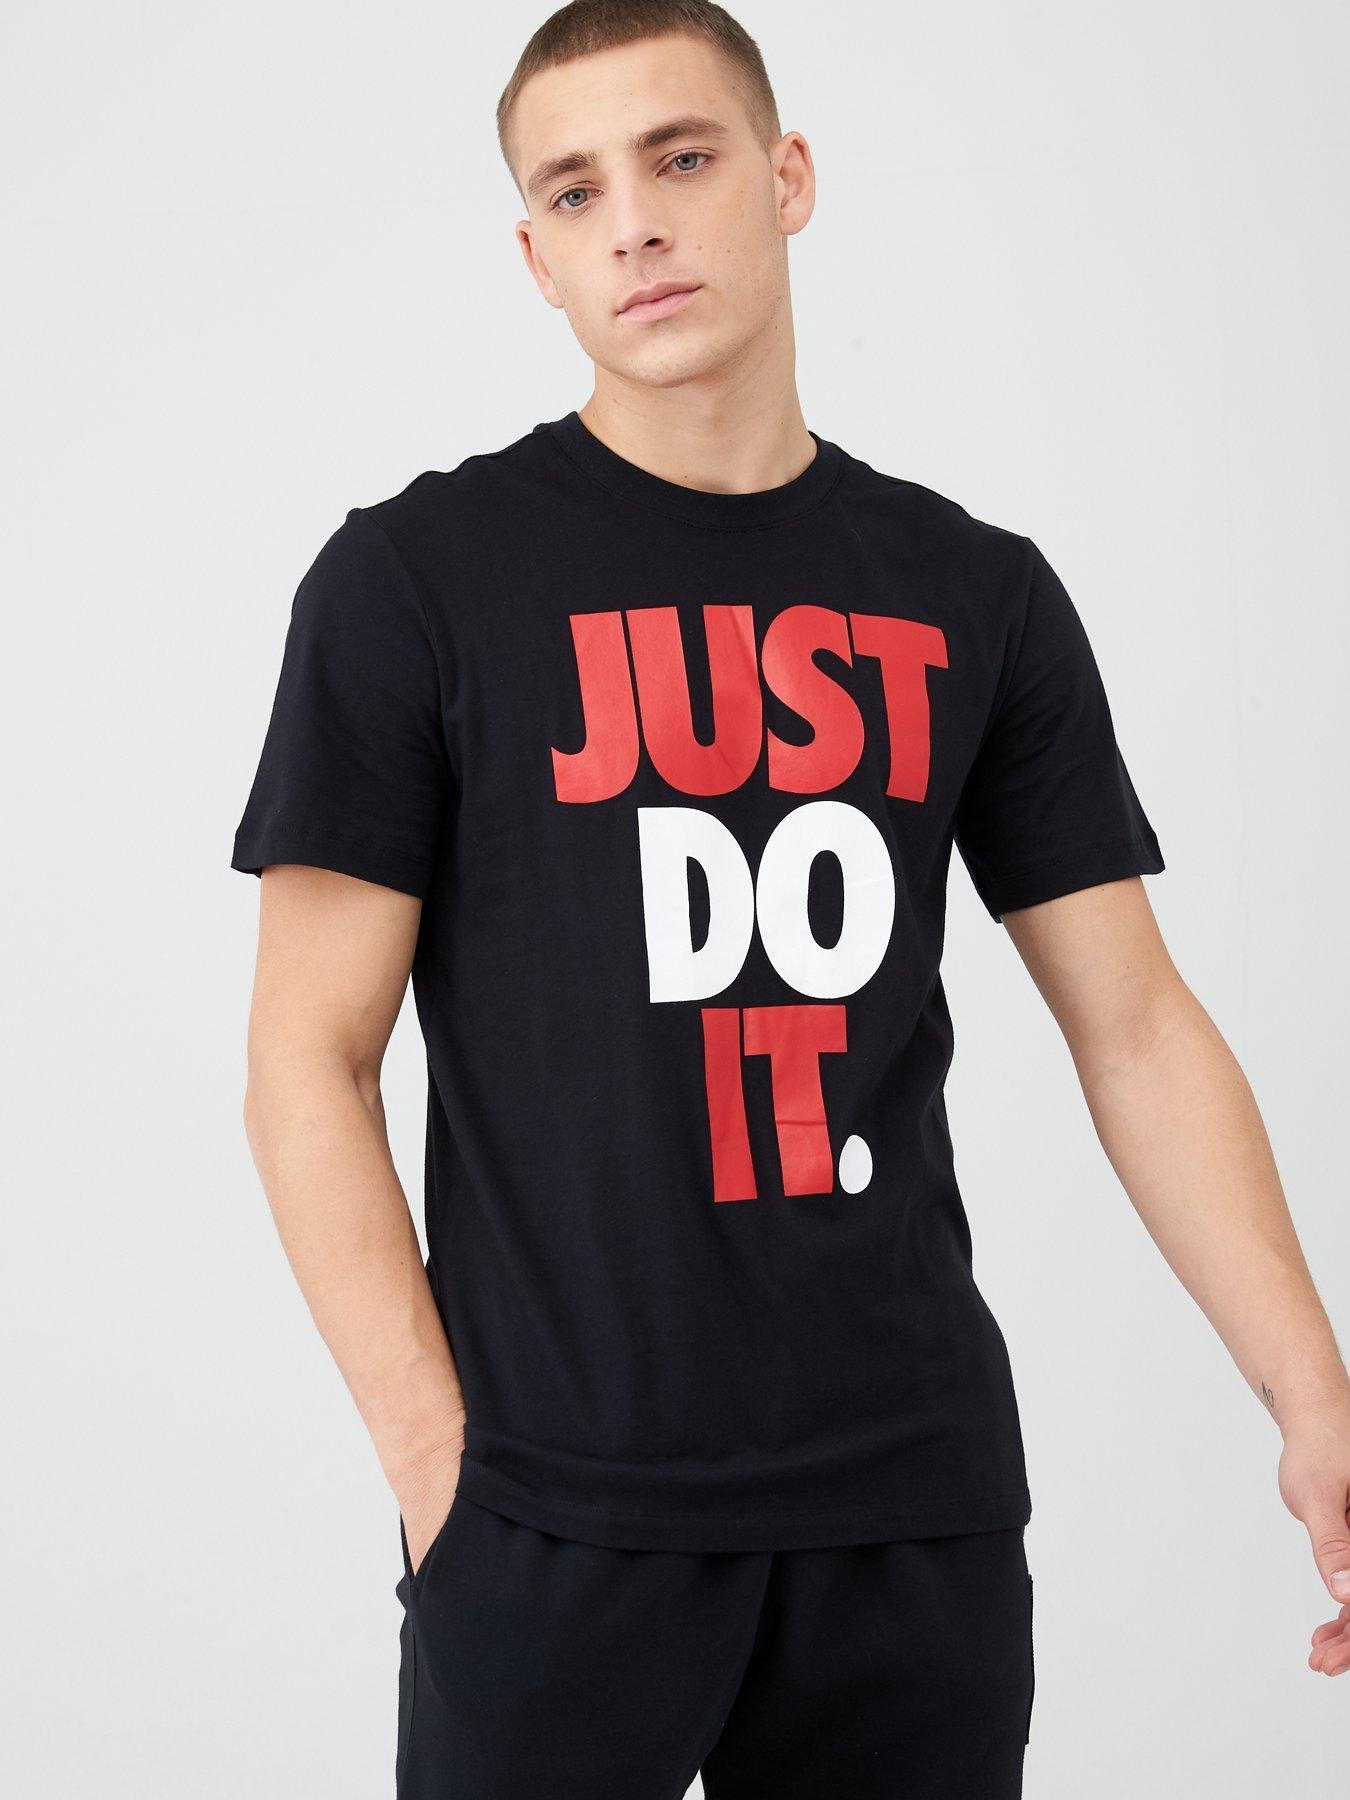 nike just do it shirt mens online shop 